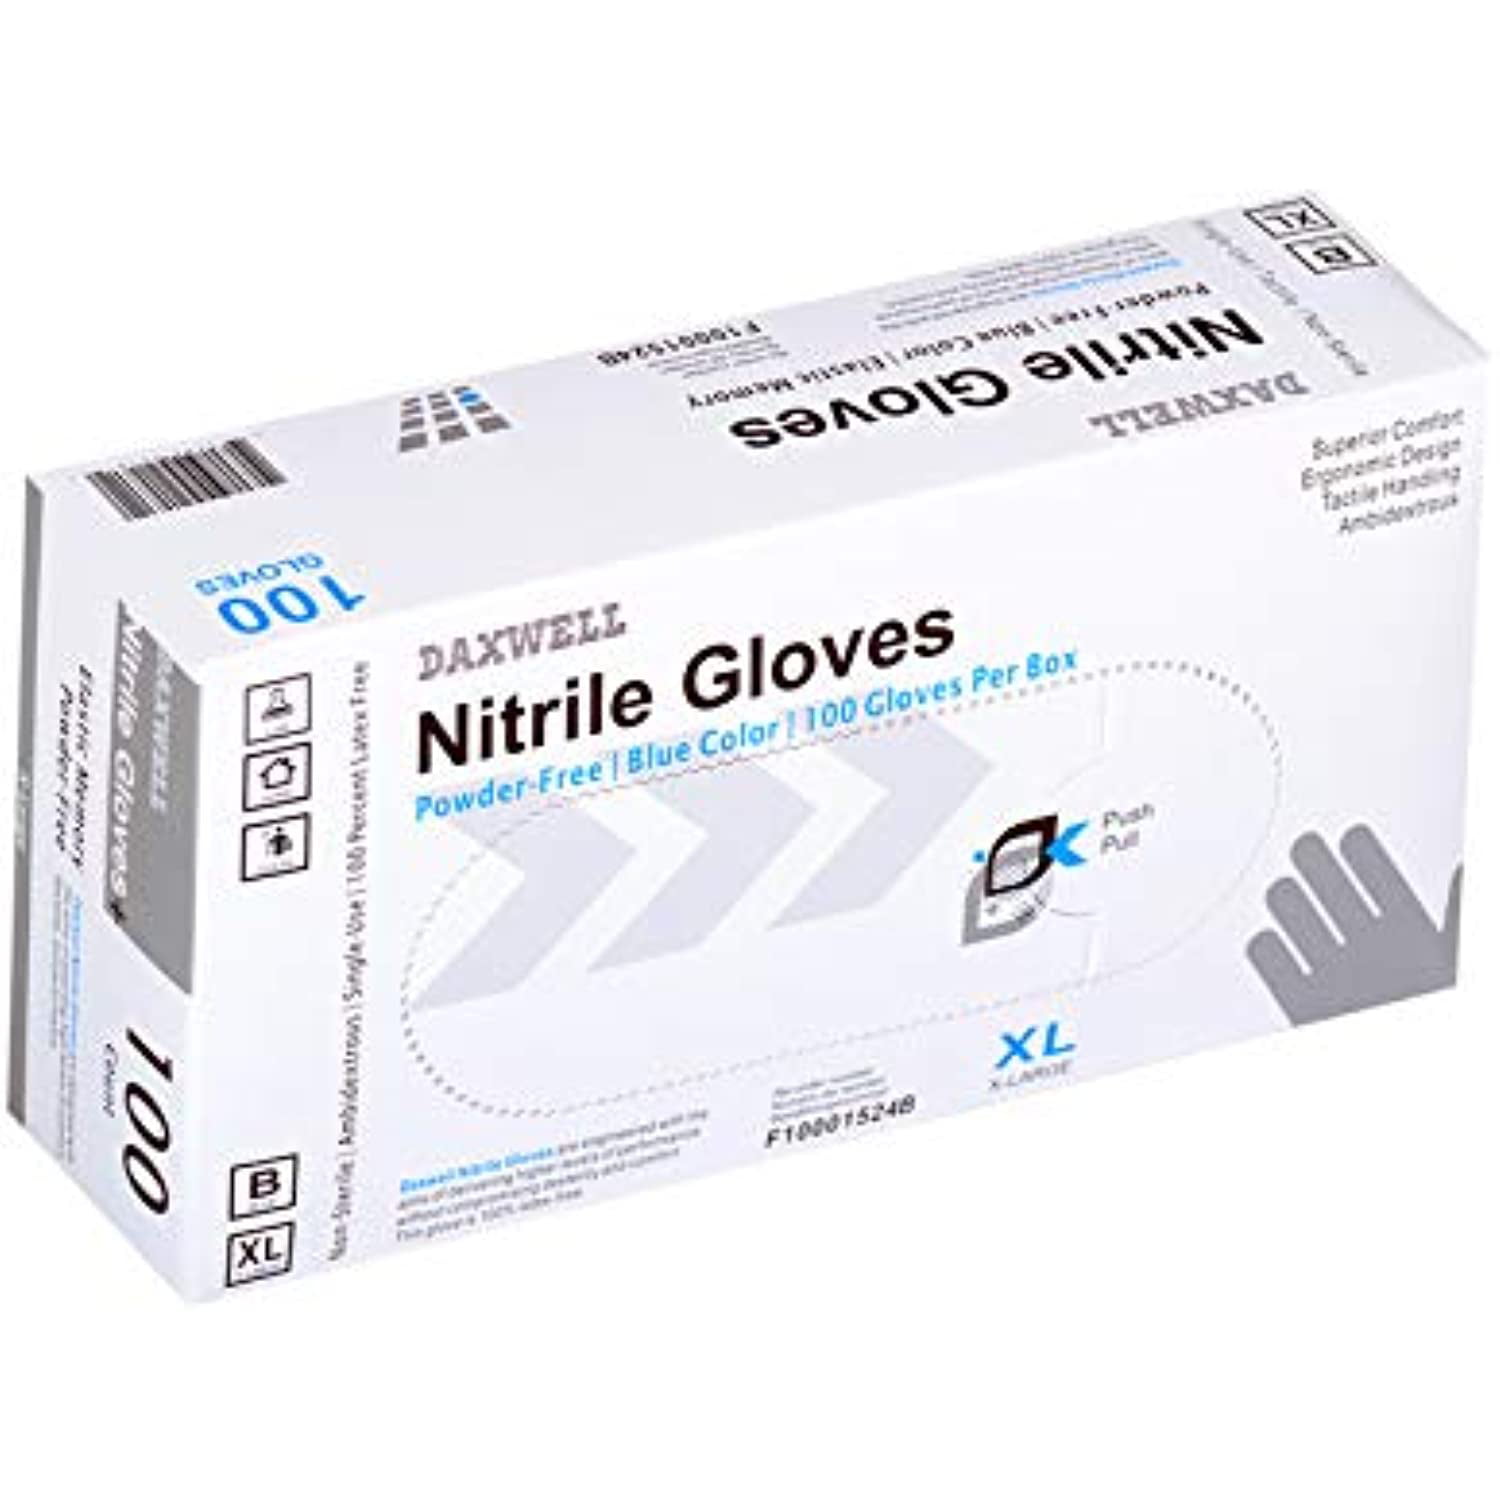 Daxwell Nitrile Gloves, Powder Free, Extra Large, Blue, F10001524b (Box ...